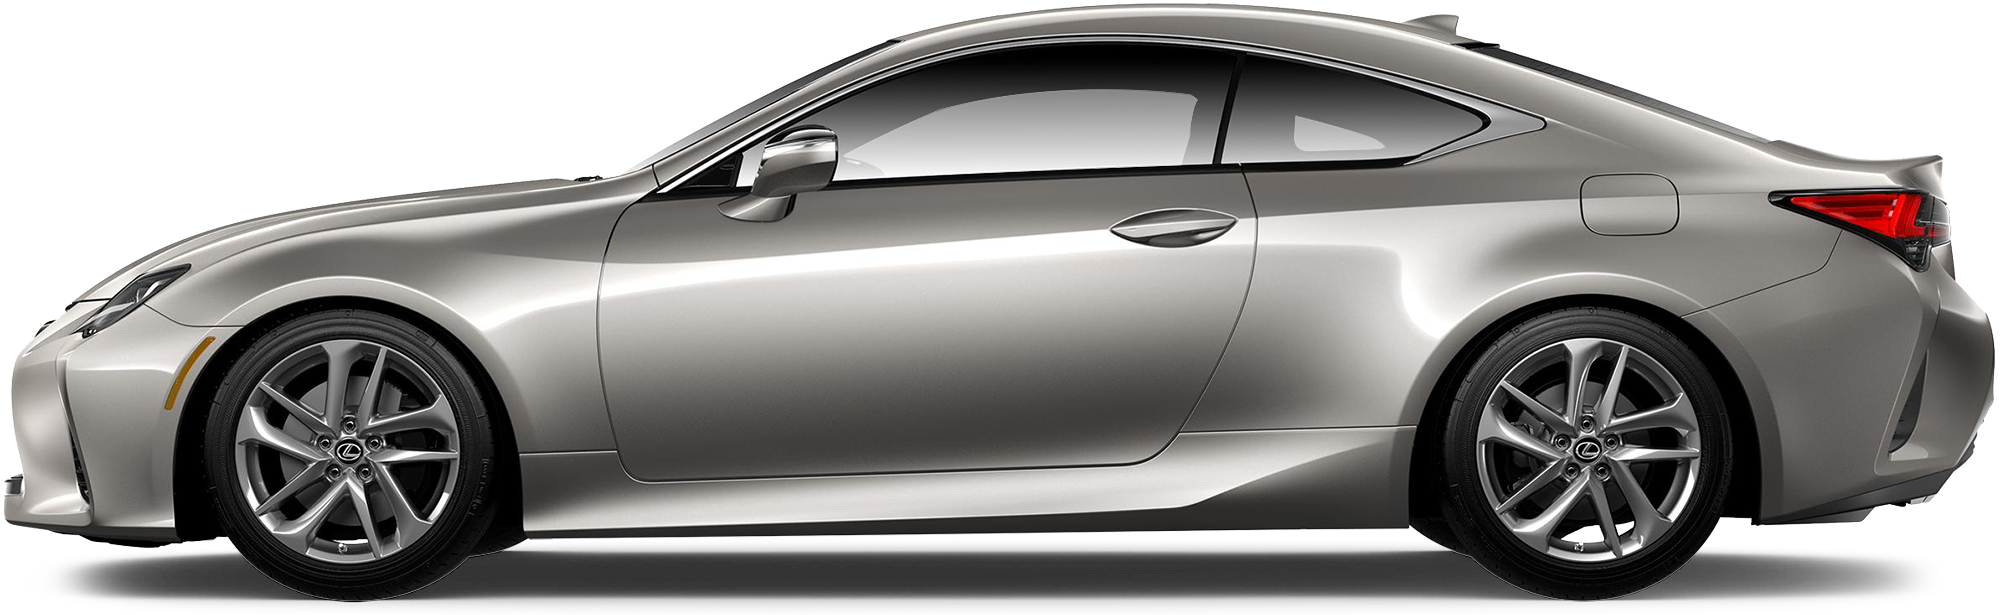 New 2023 Lexus RC 300 Boston | New Coupe Photos, Specs & Details